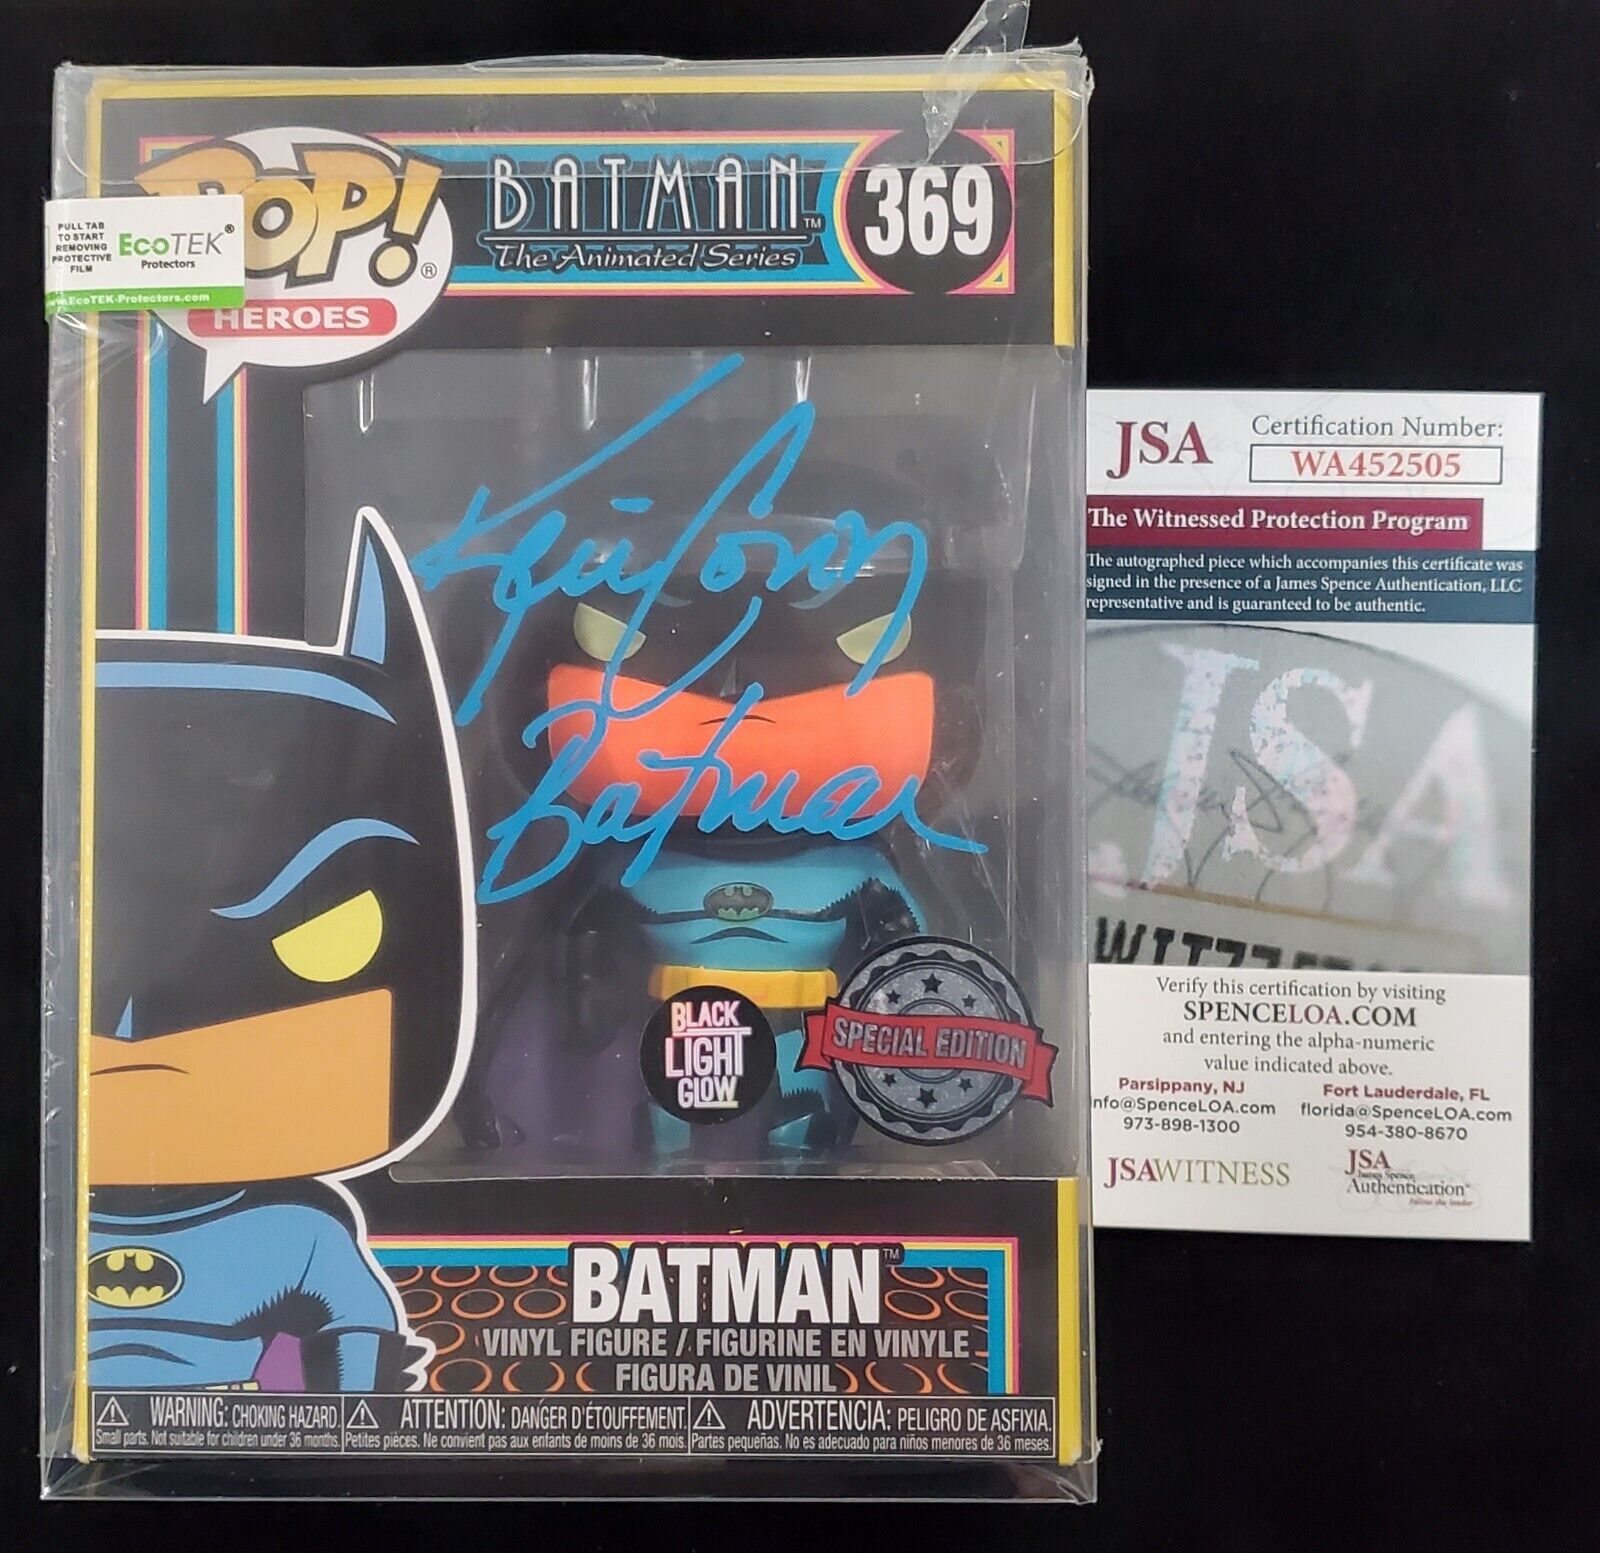 Buy Pop! Batman (The Animated Series) at Funko.